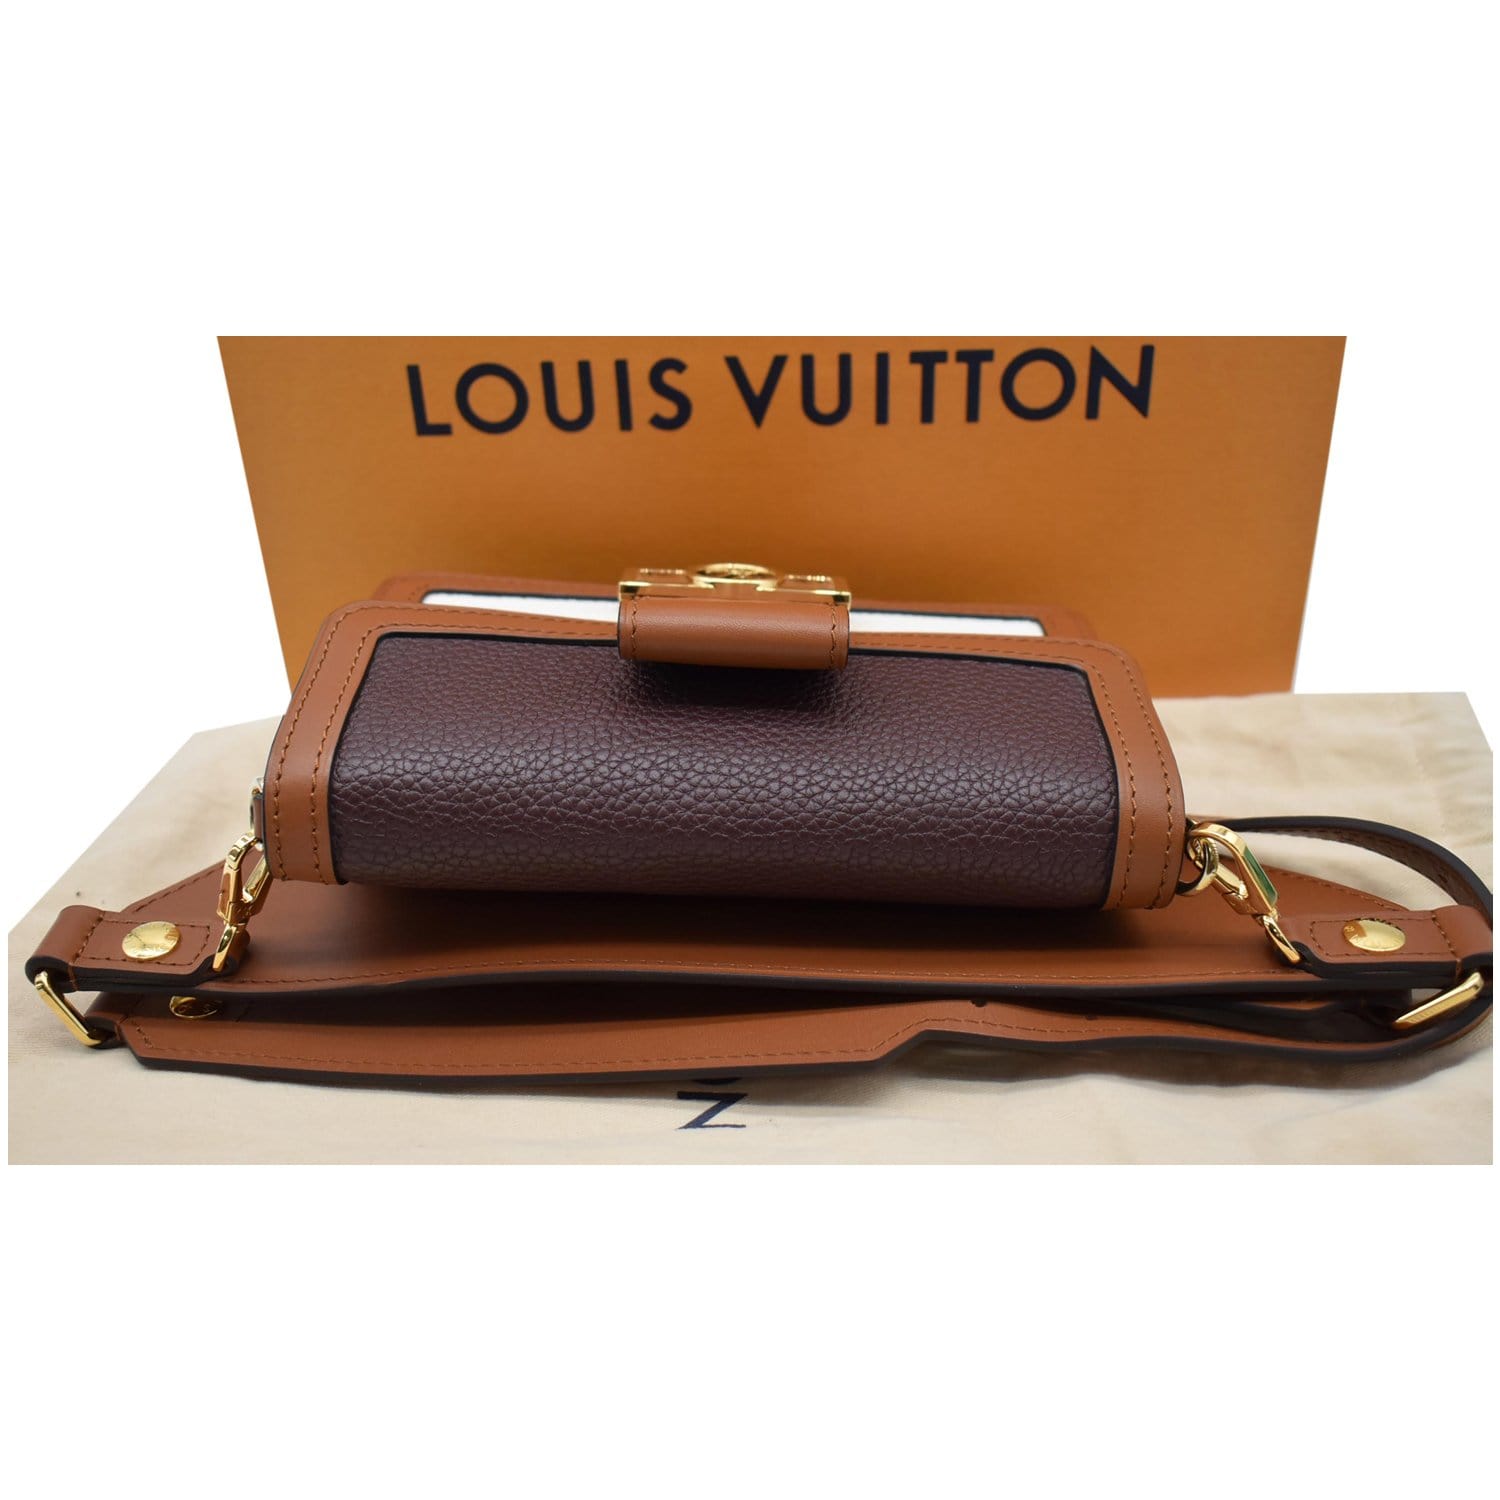 Louis Vuitton' Taurillon leather bag worth N2m - New Telegraph